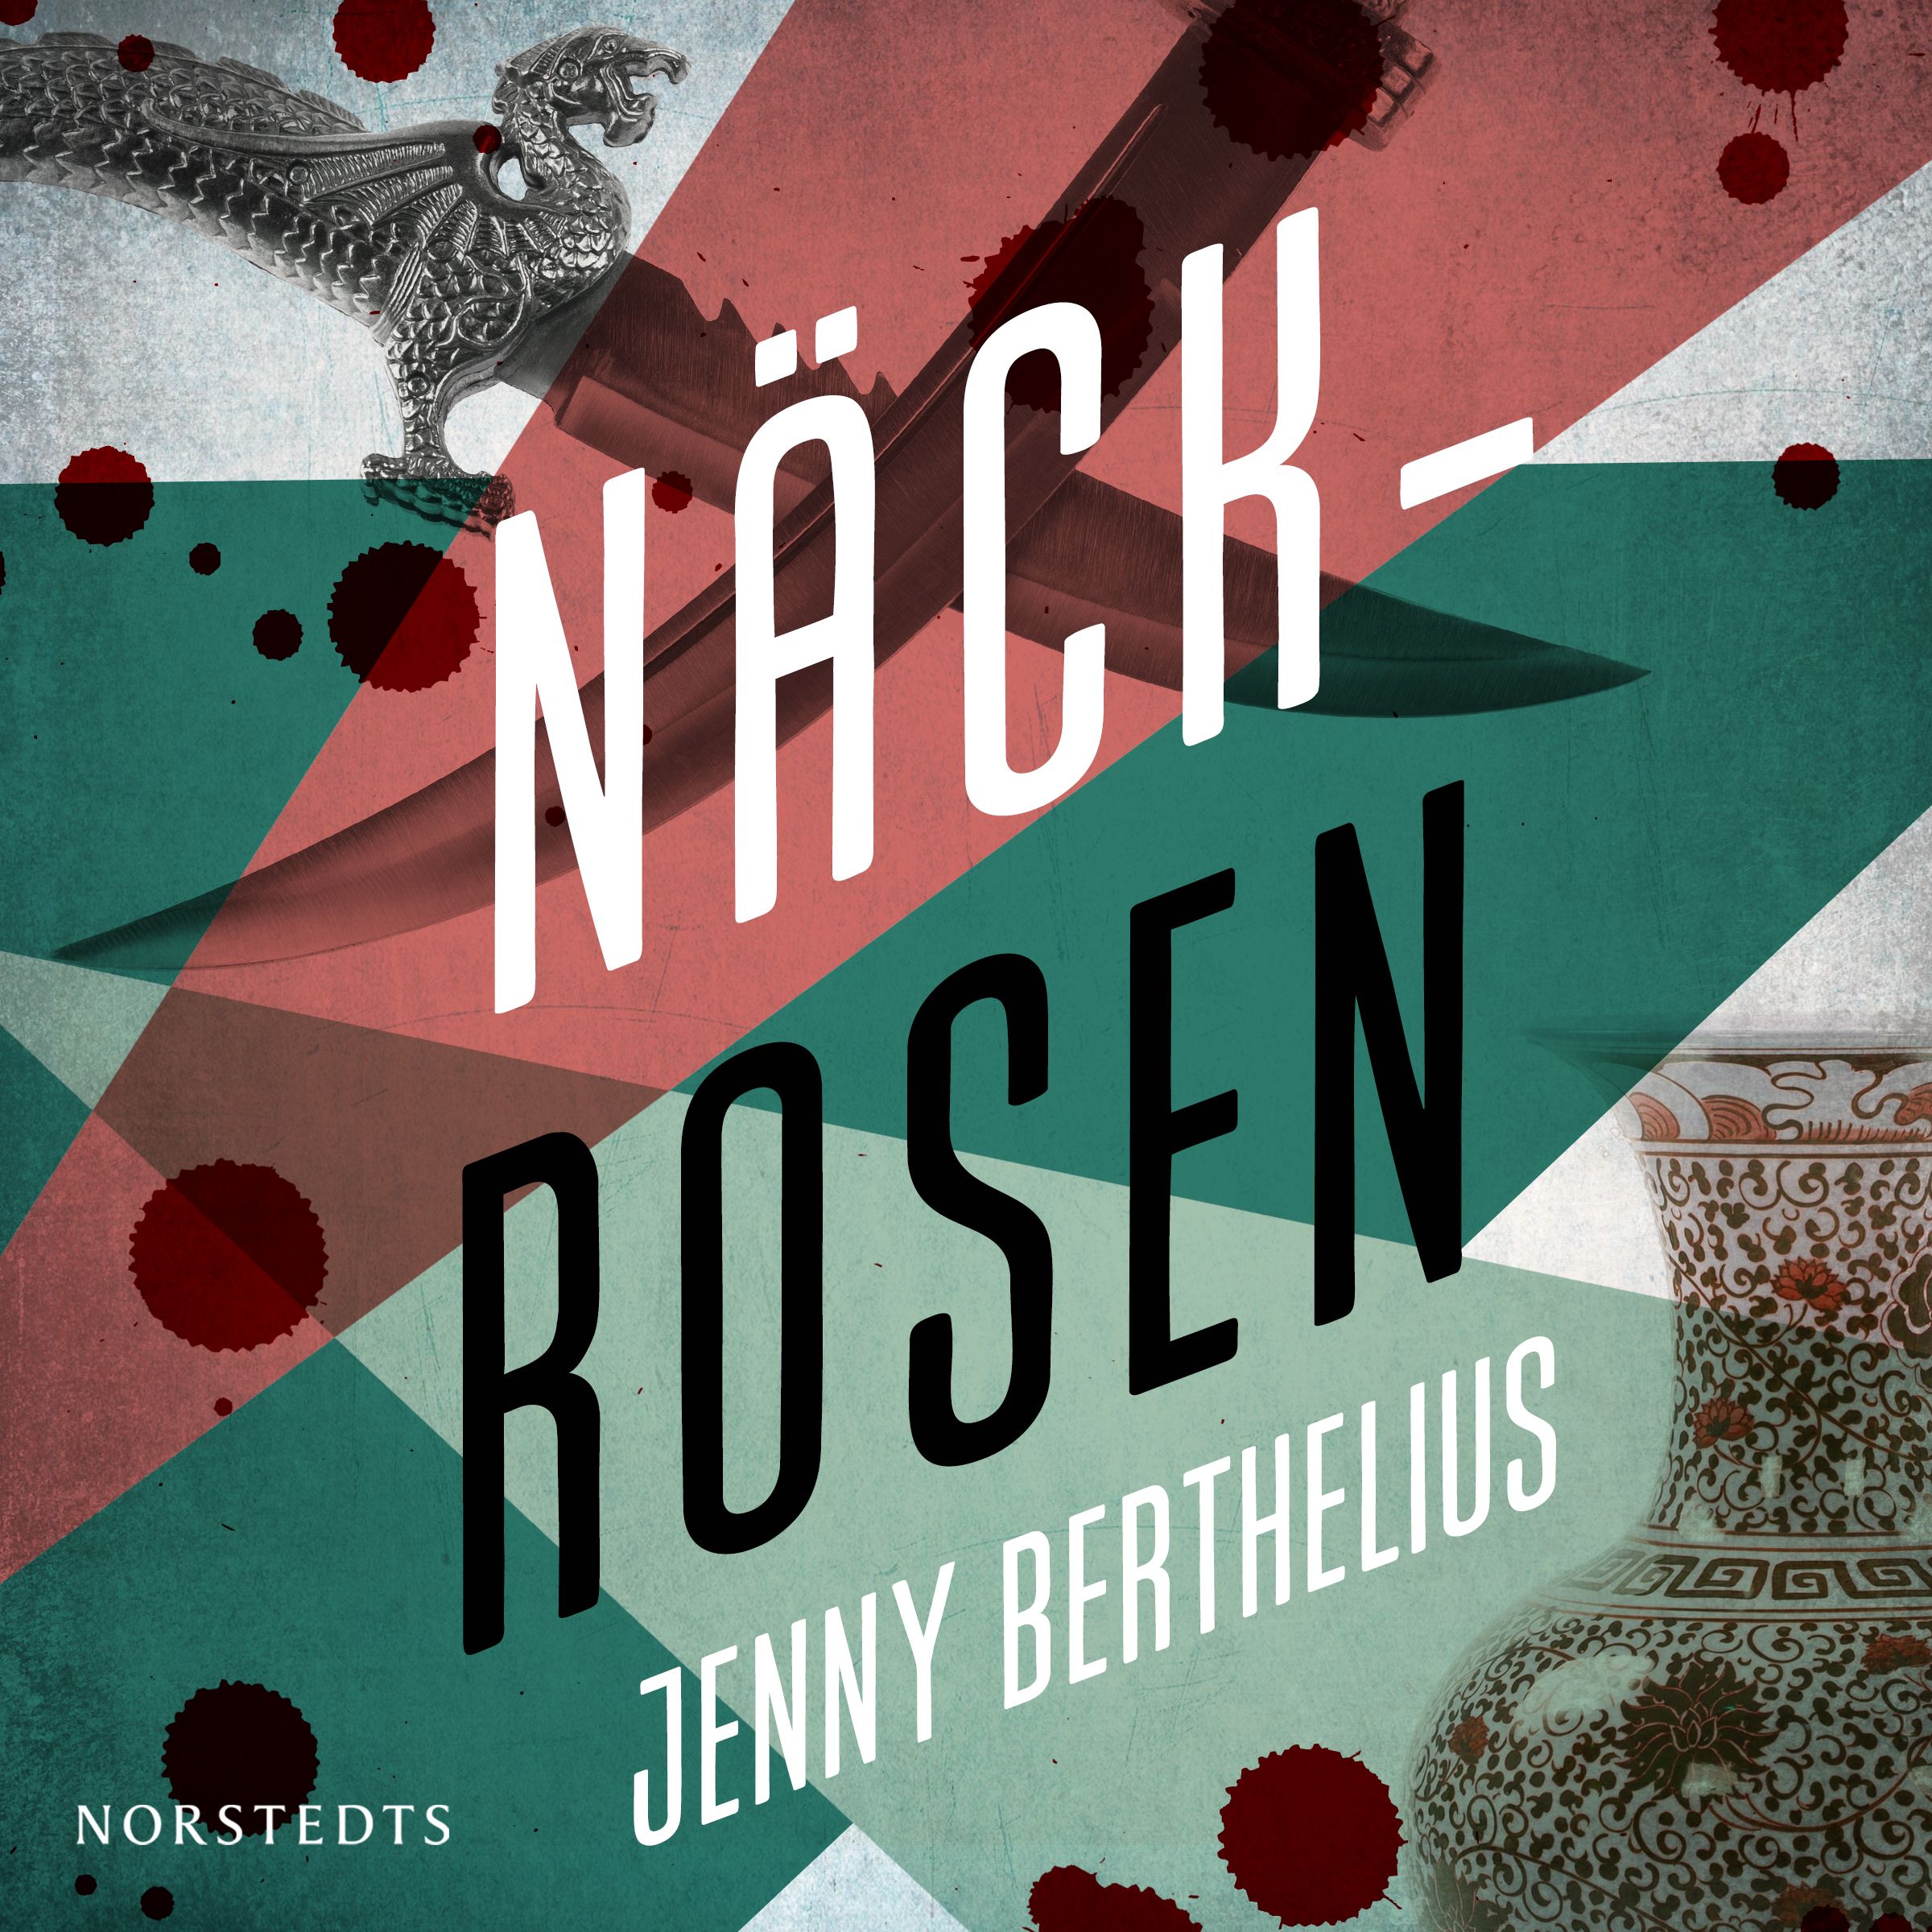 Näckrosen, audiobook by Jenny Berthelius